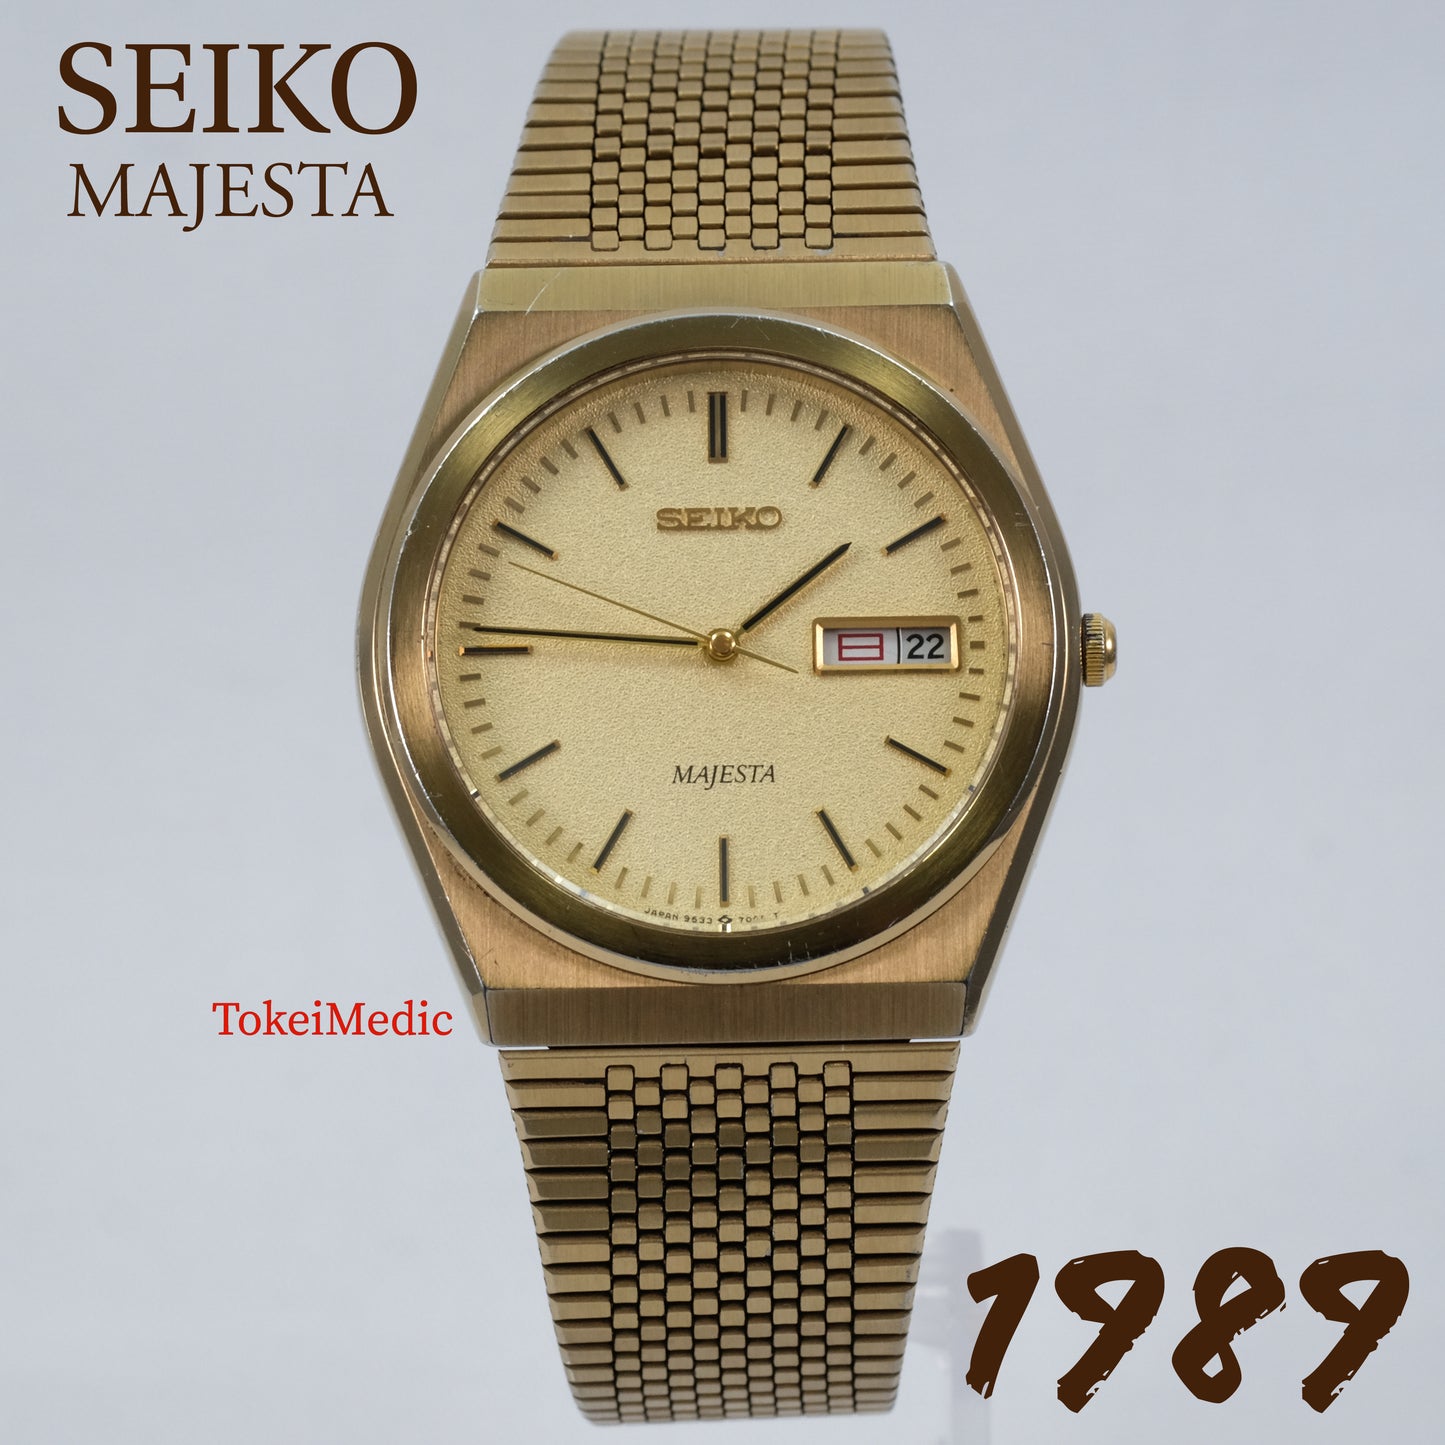 1989 Seiko Majesta 9533-7000